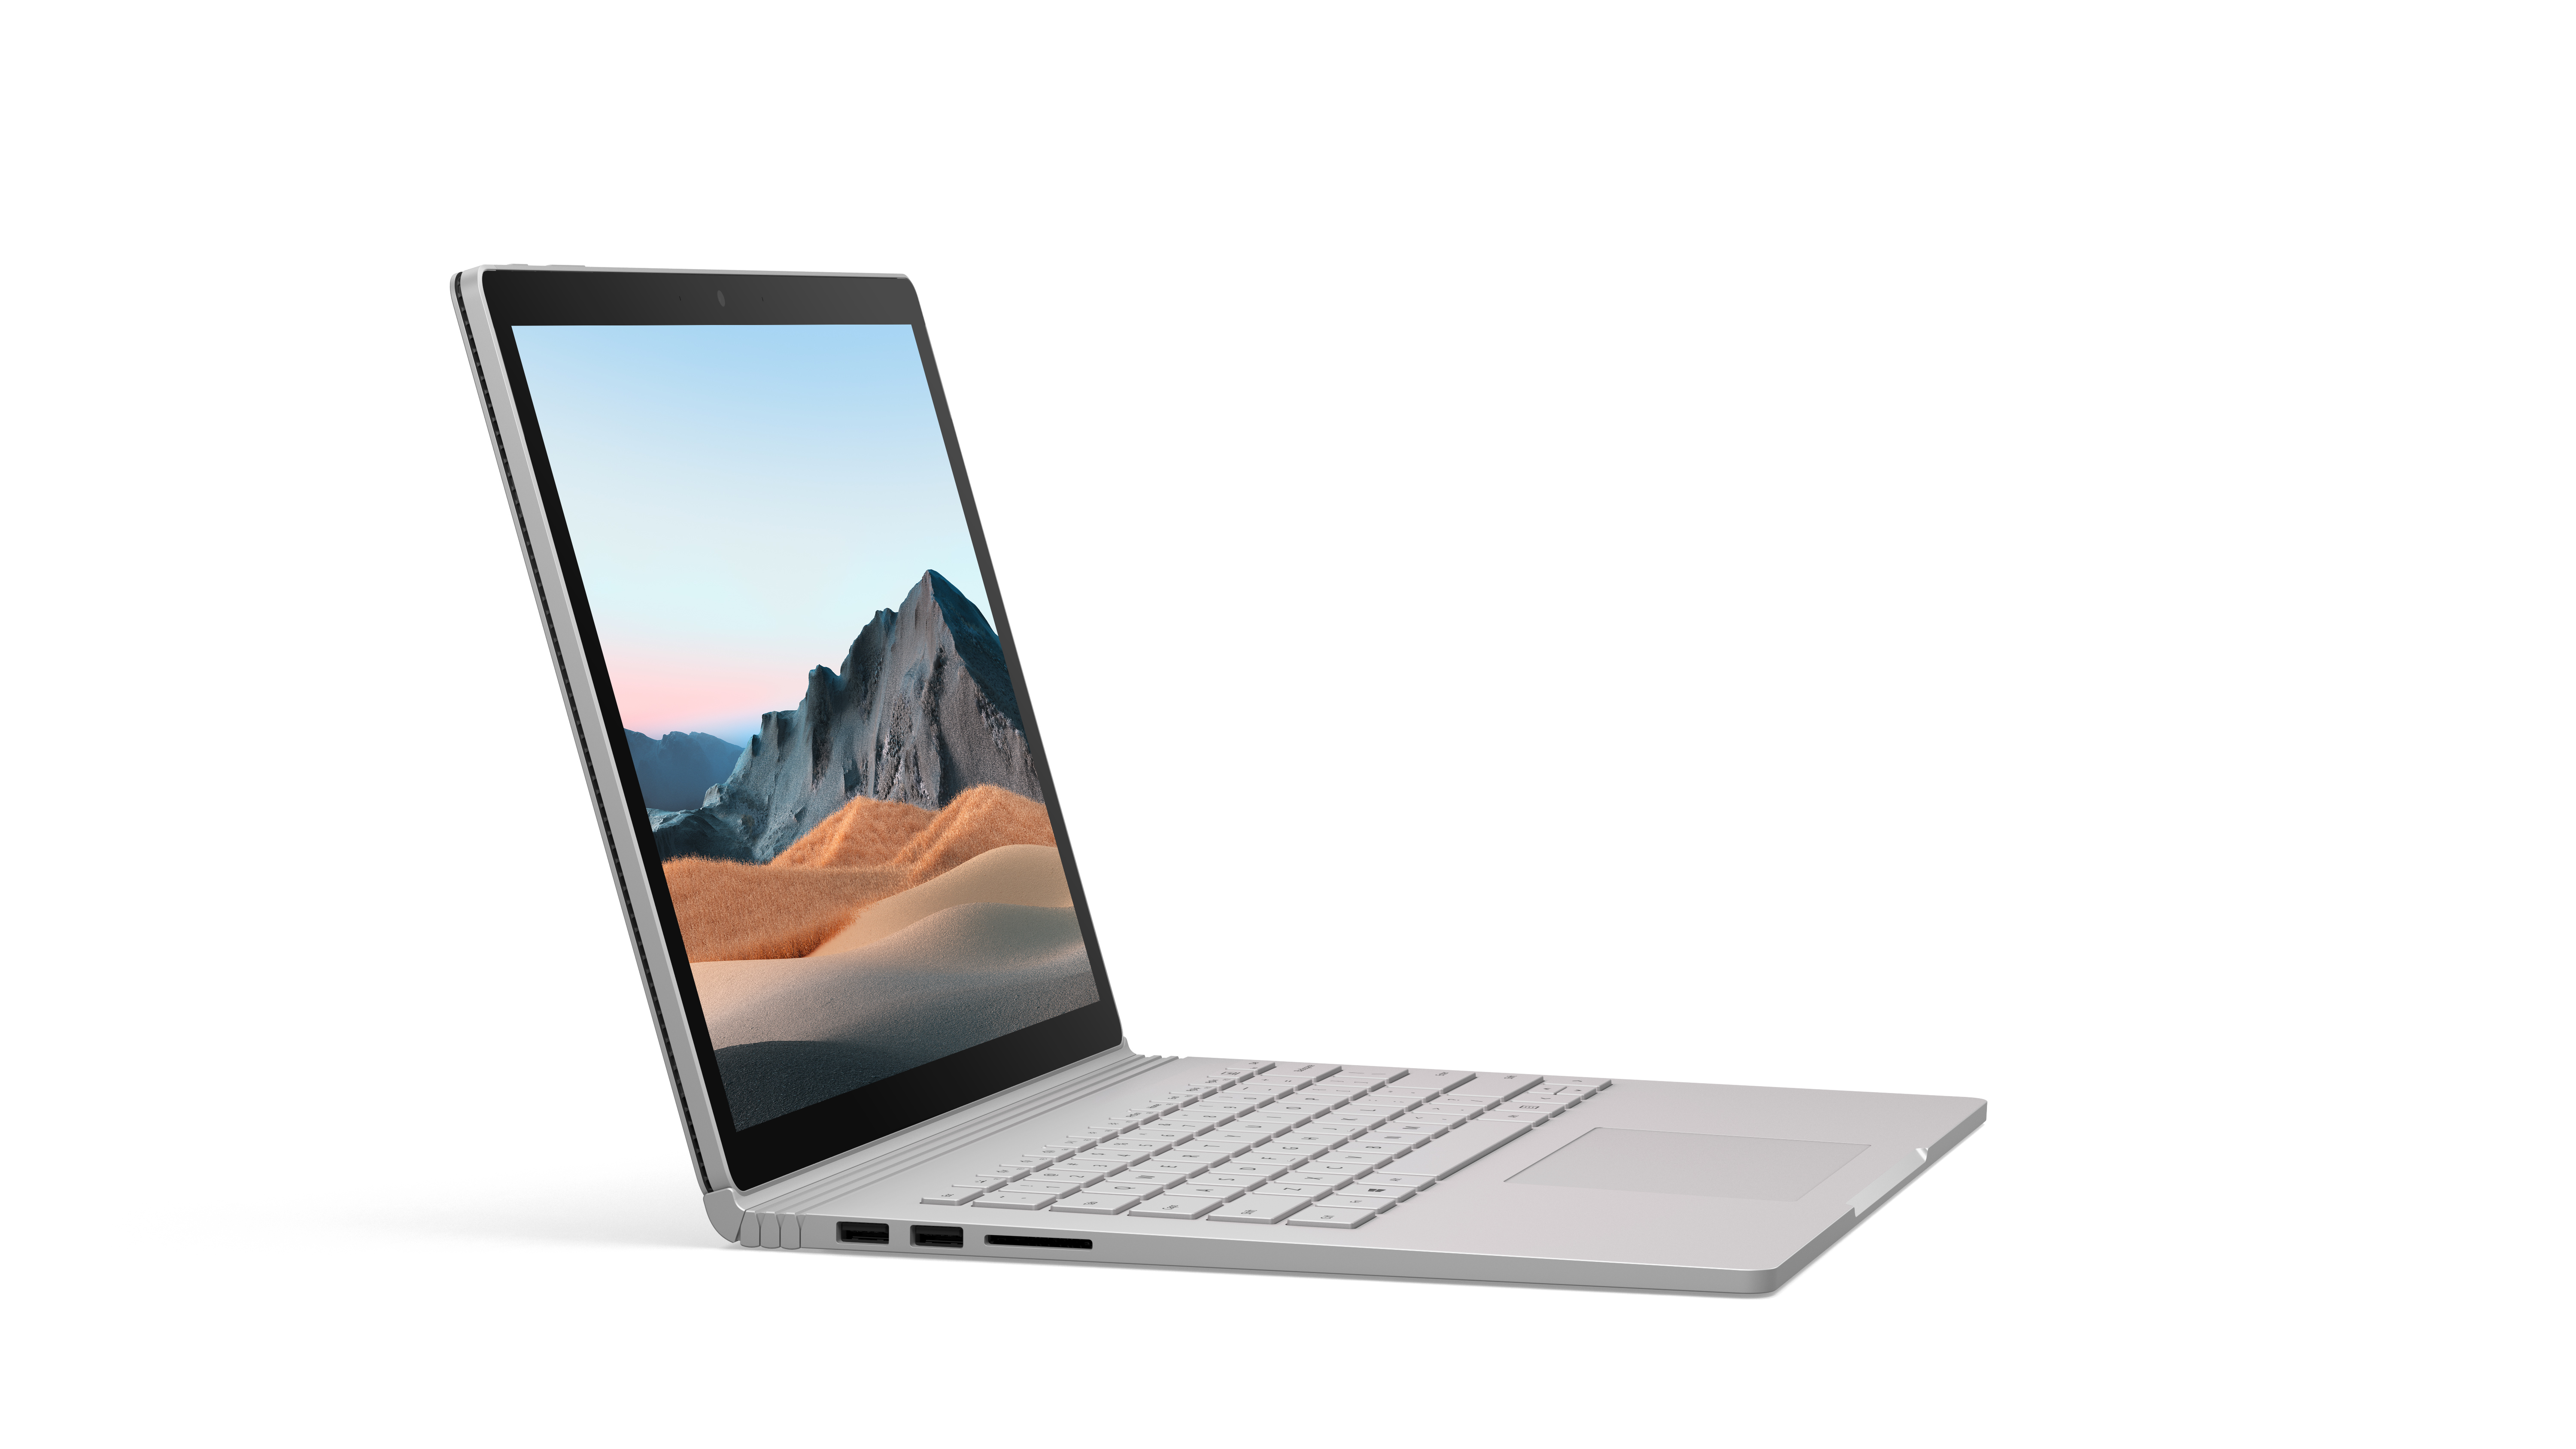 Microsoft Surface Book 3, 13" Touchscreen Laptop, Intel Core i5, 8GB RAM, 256GB SSD, Windows 10, Platinum, V6F-00001 - image 9 of 9